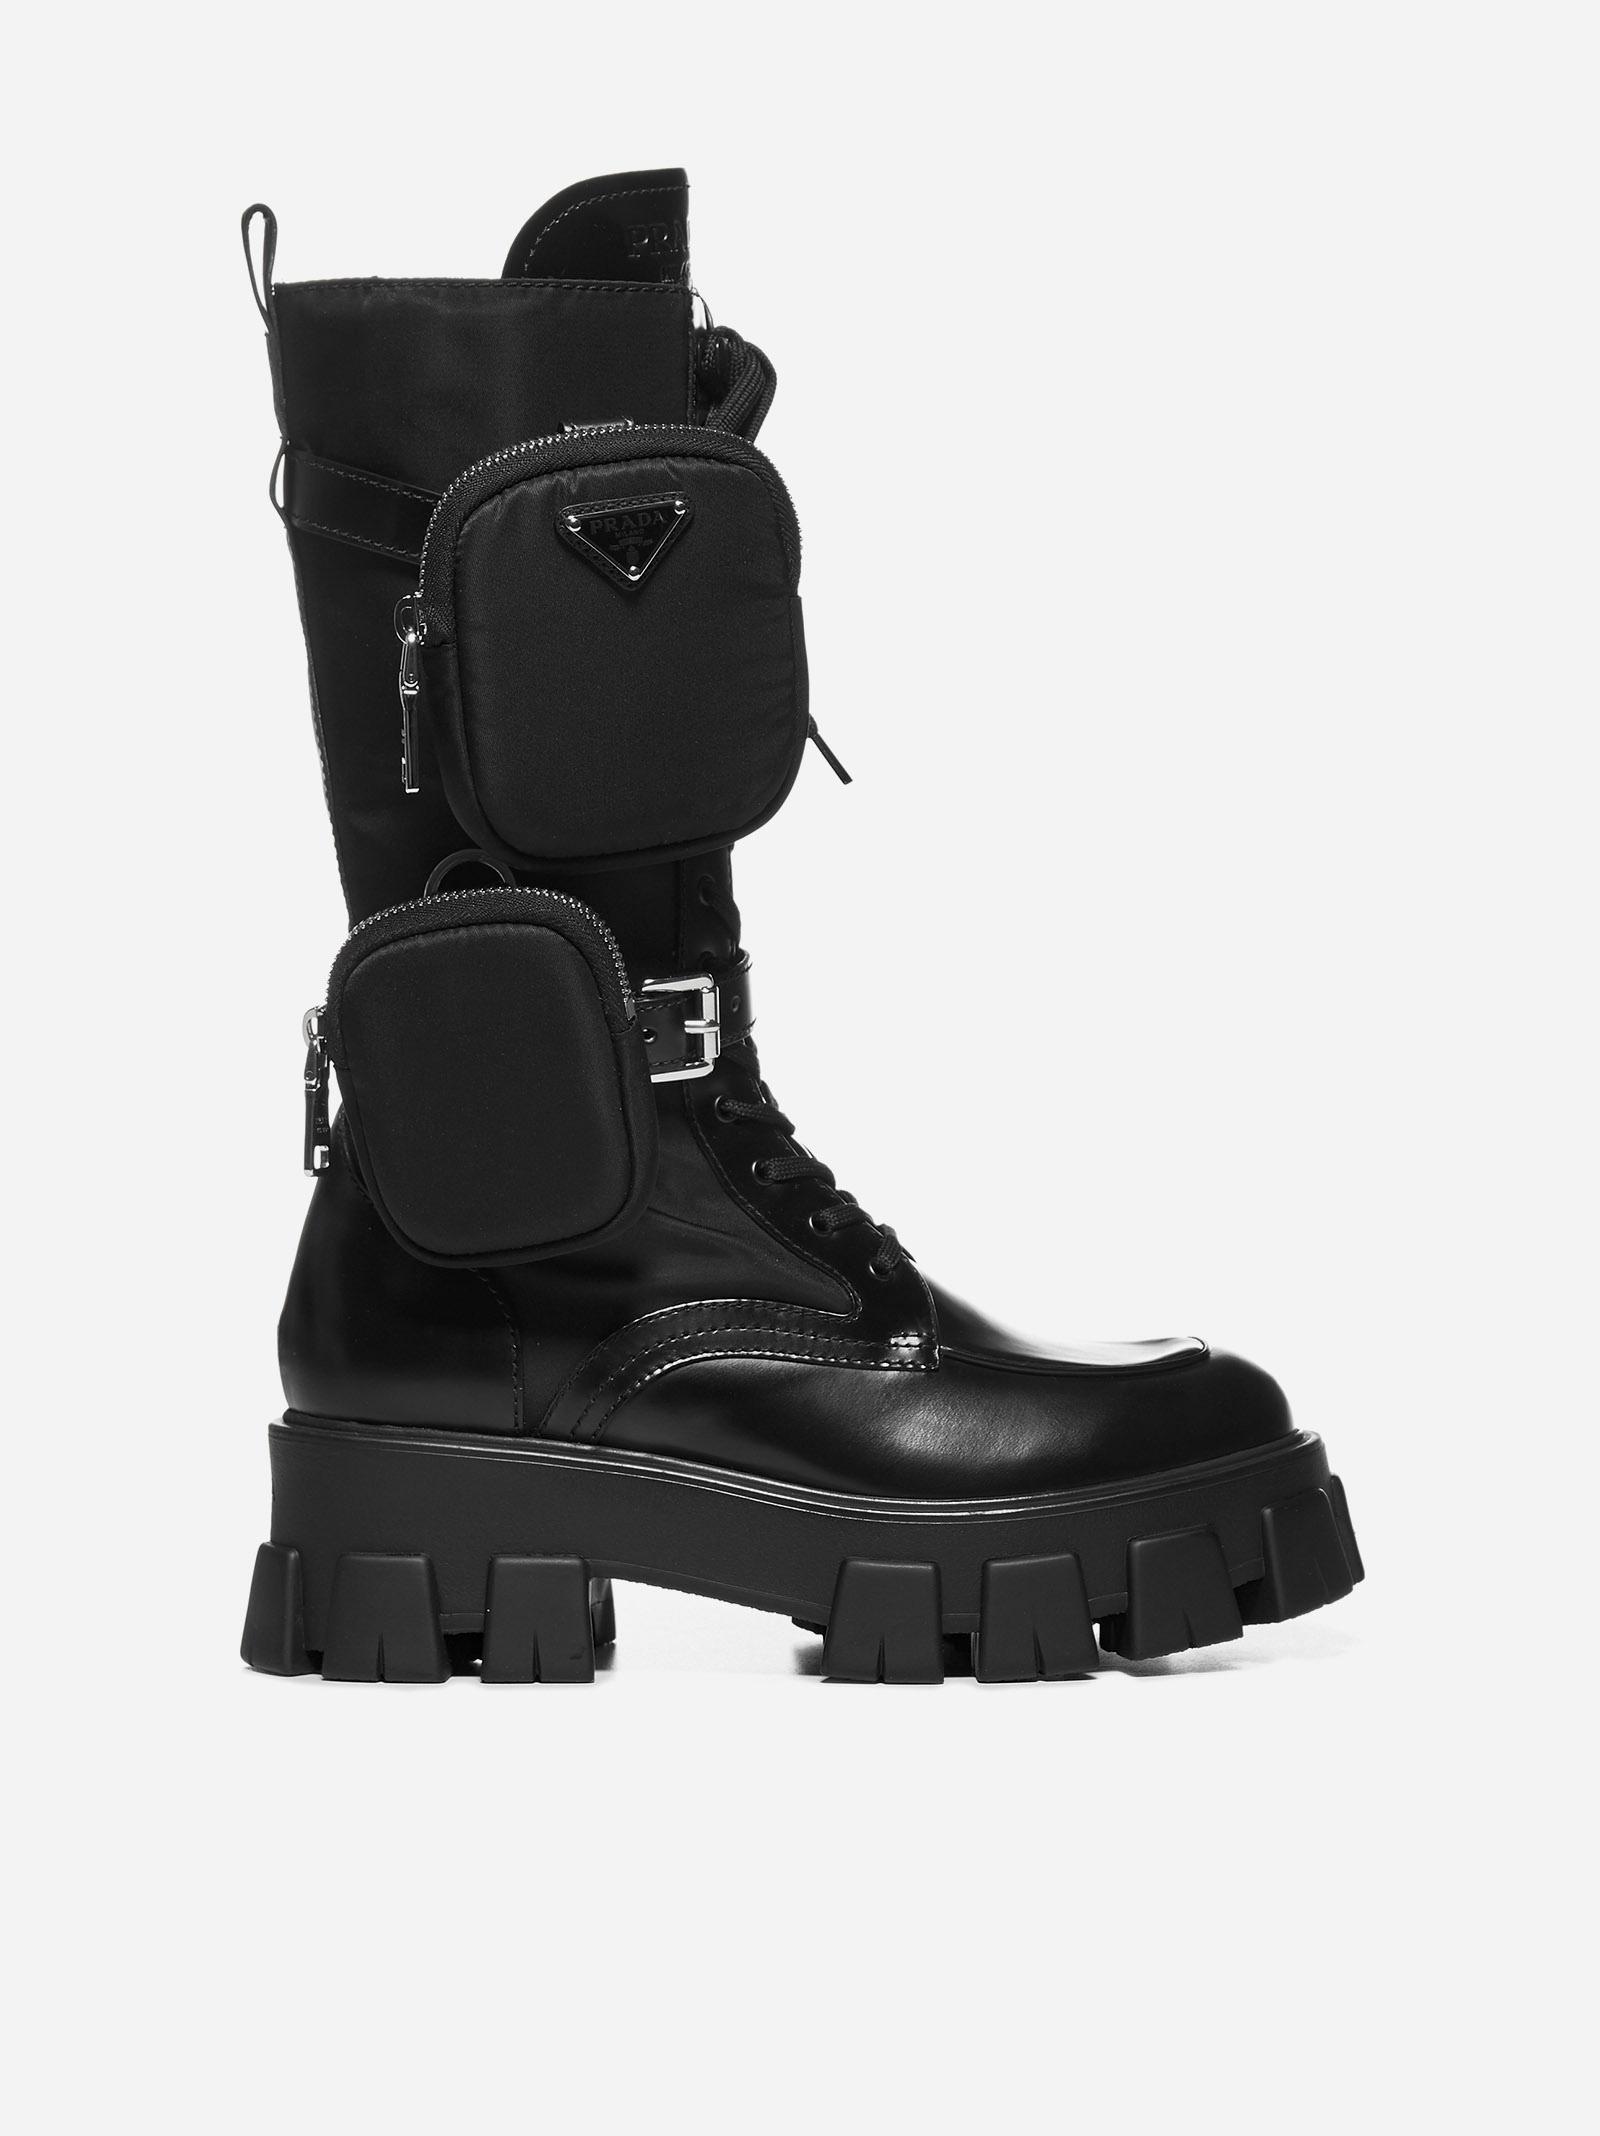 Prada Monolith Leather And Nylon Combat Boots in Black - Lyst